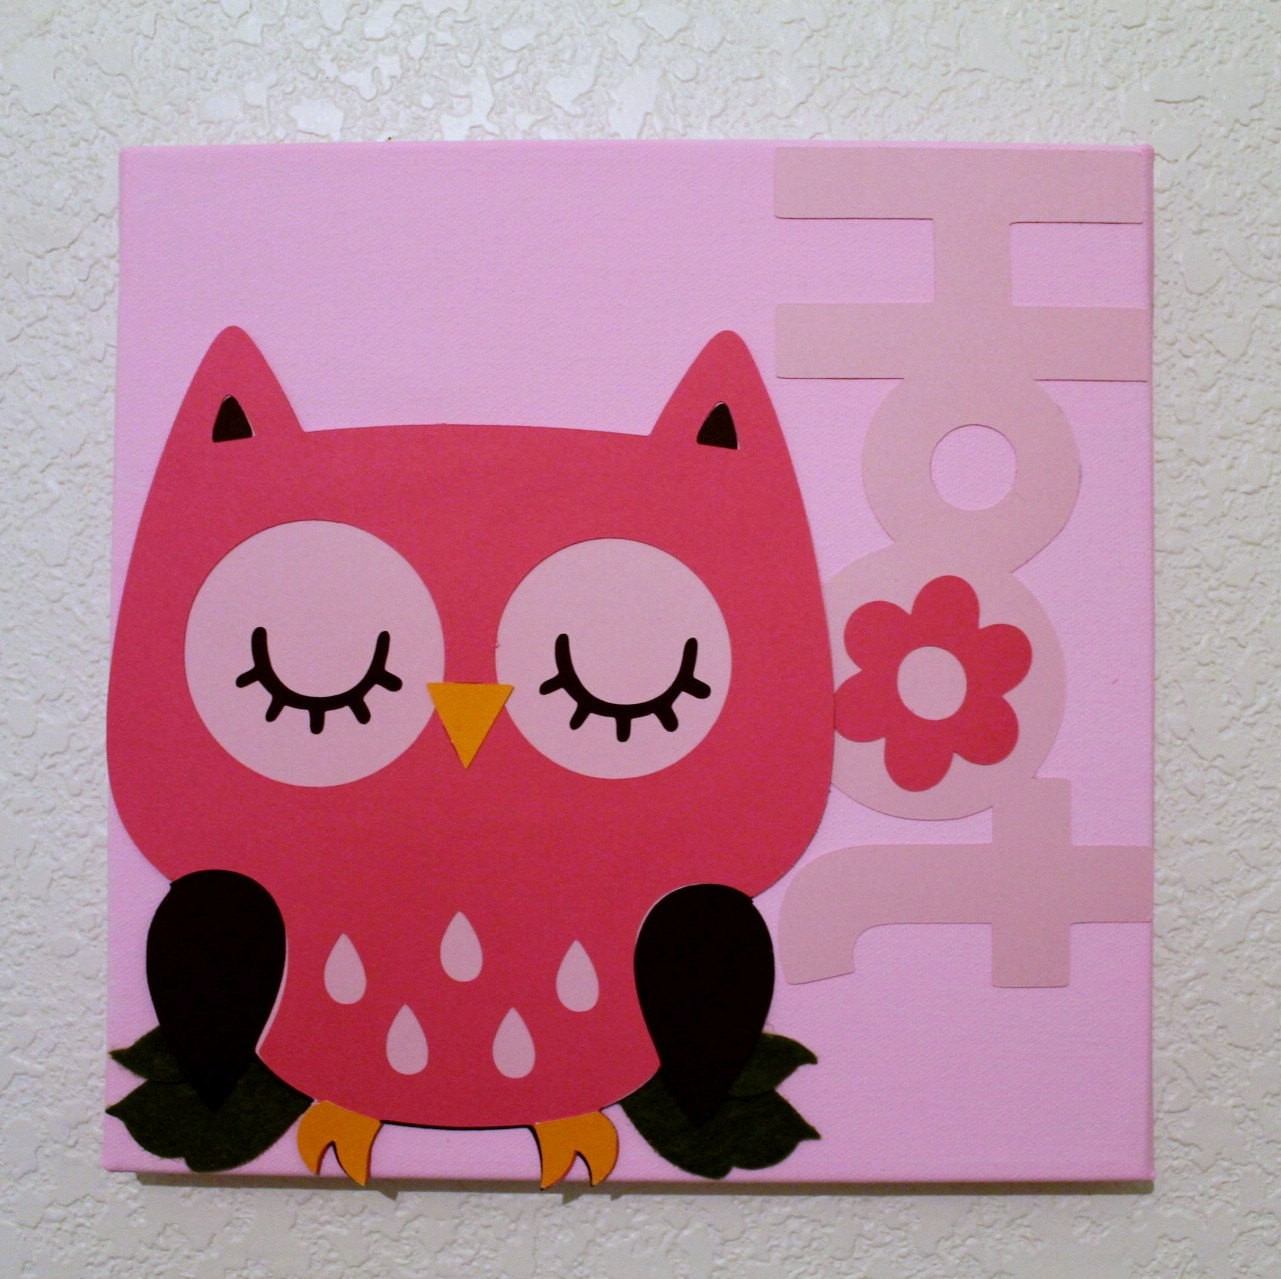 Owl Baby Nursery Decor
 Wall Decor Pink Owl Baby Nursery Kids Children Room Decor